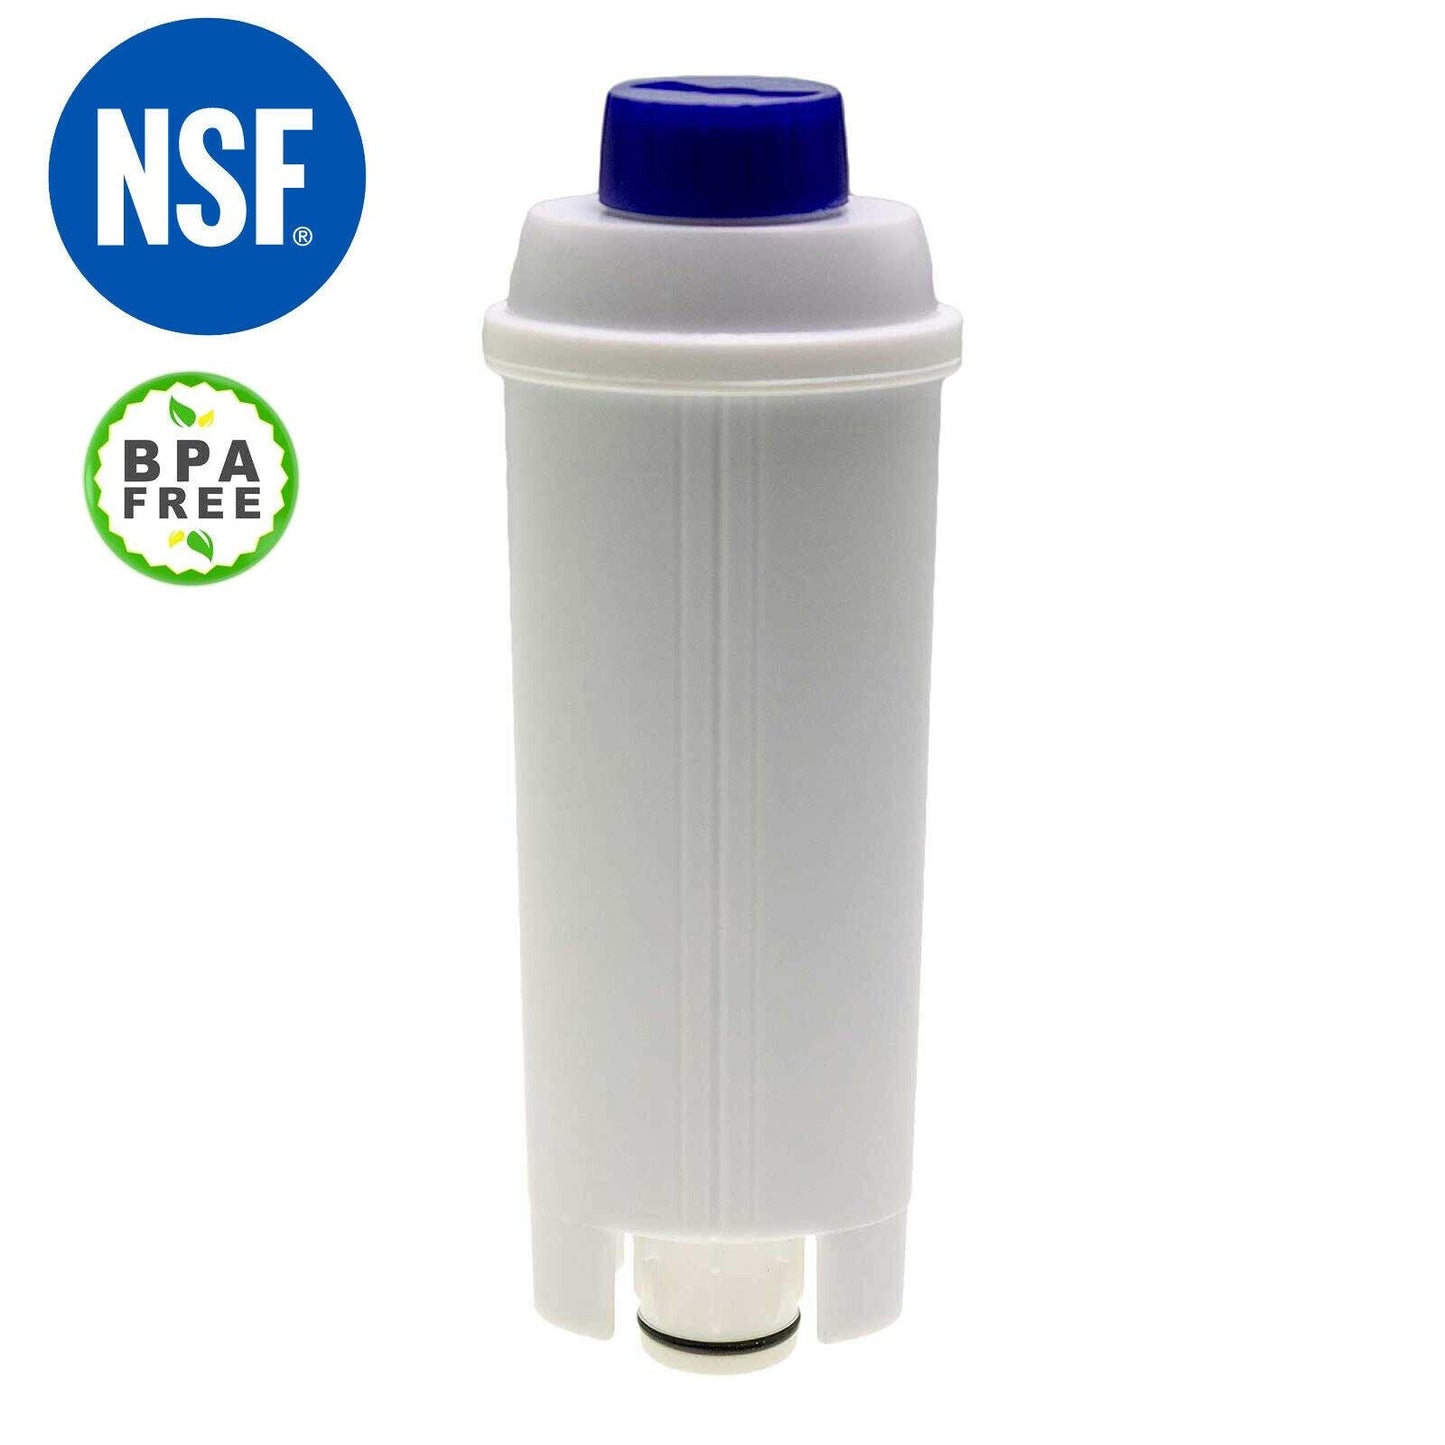 Impurity Softener Filter For DeLonghi ESAM 6900 6700 ESAM 6620 Sparesbarn